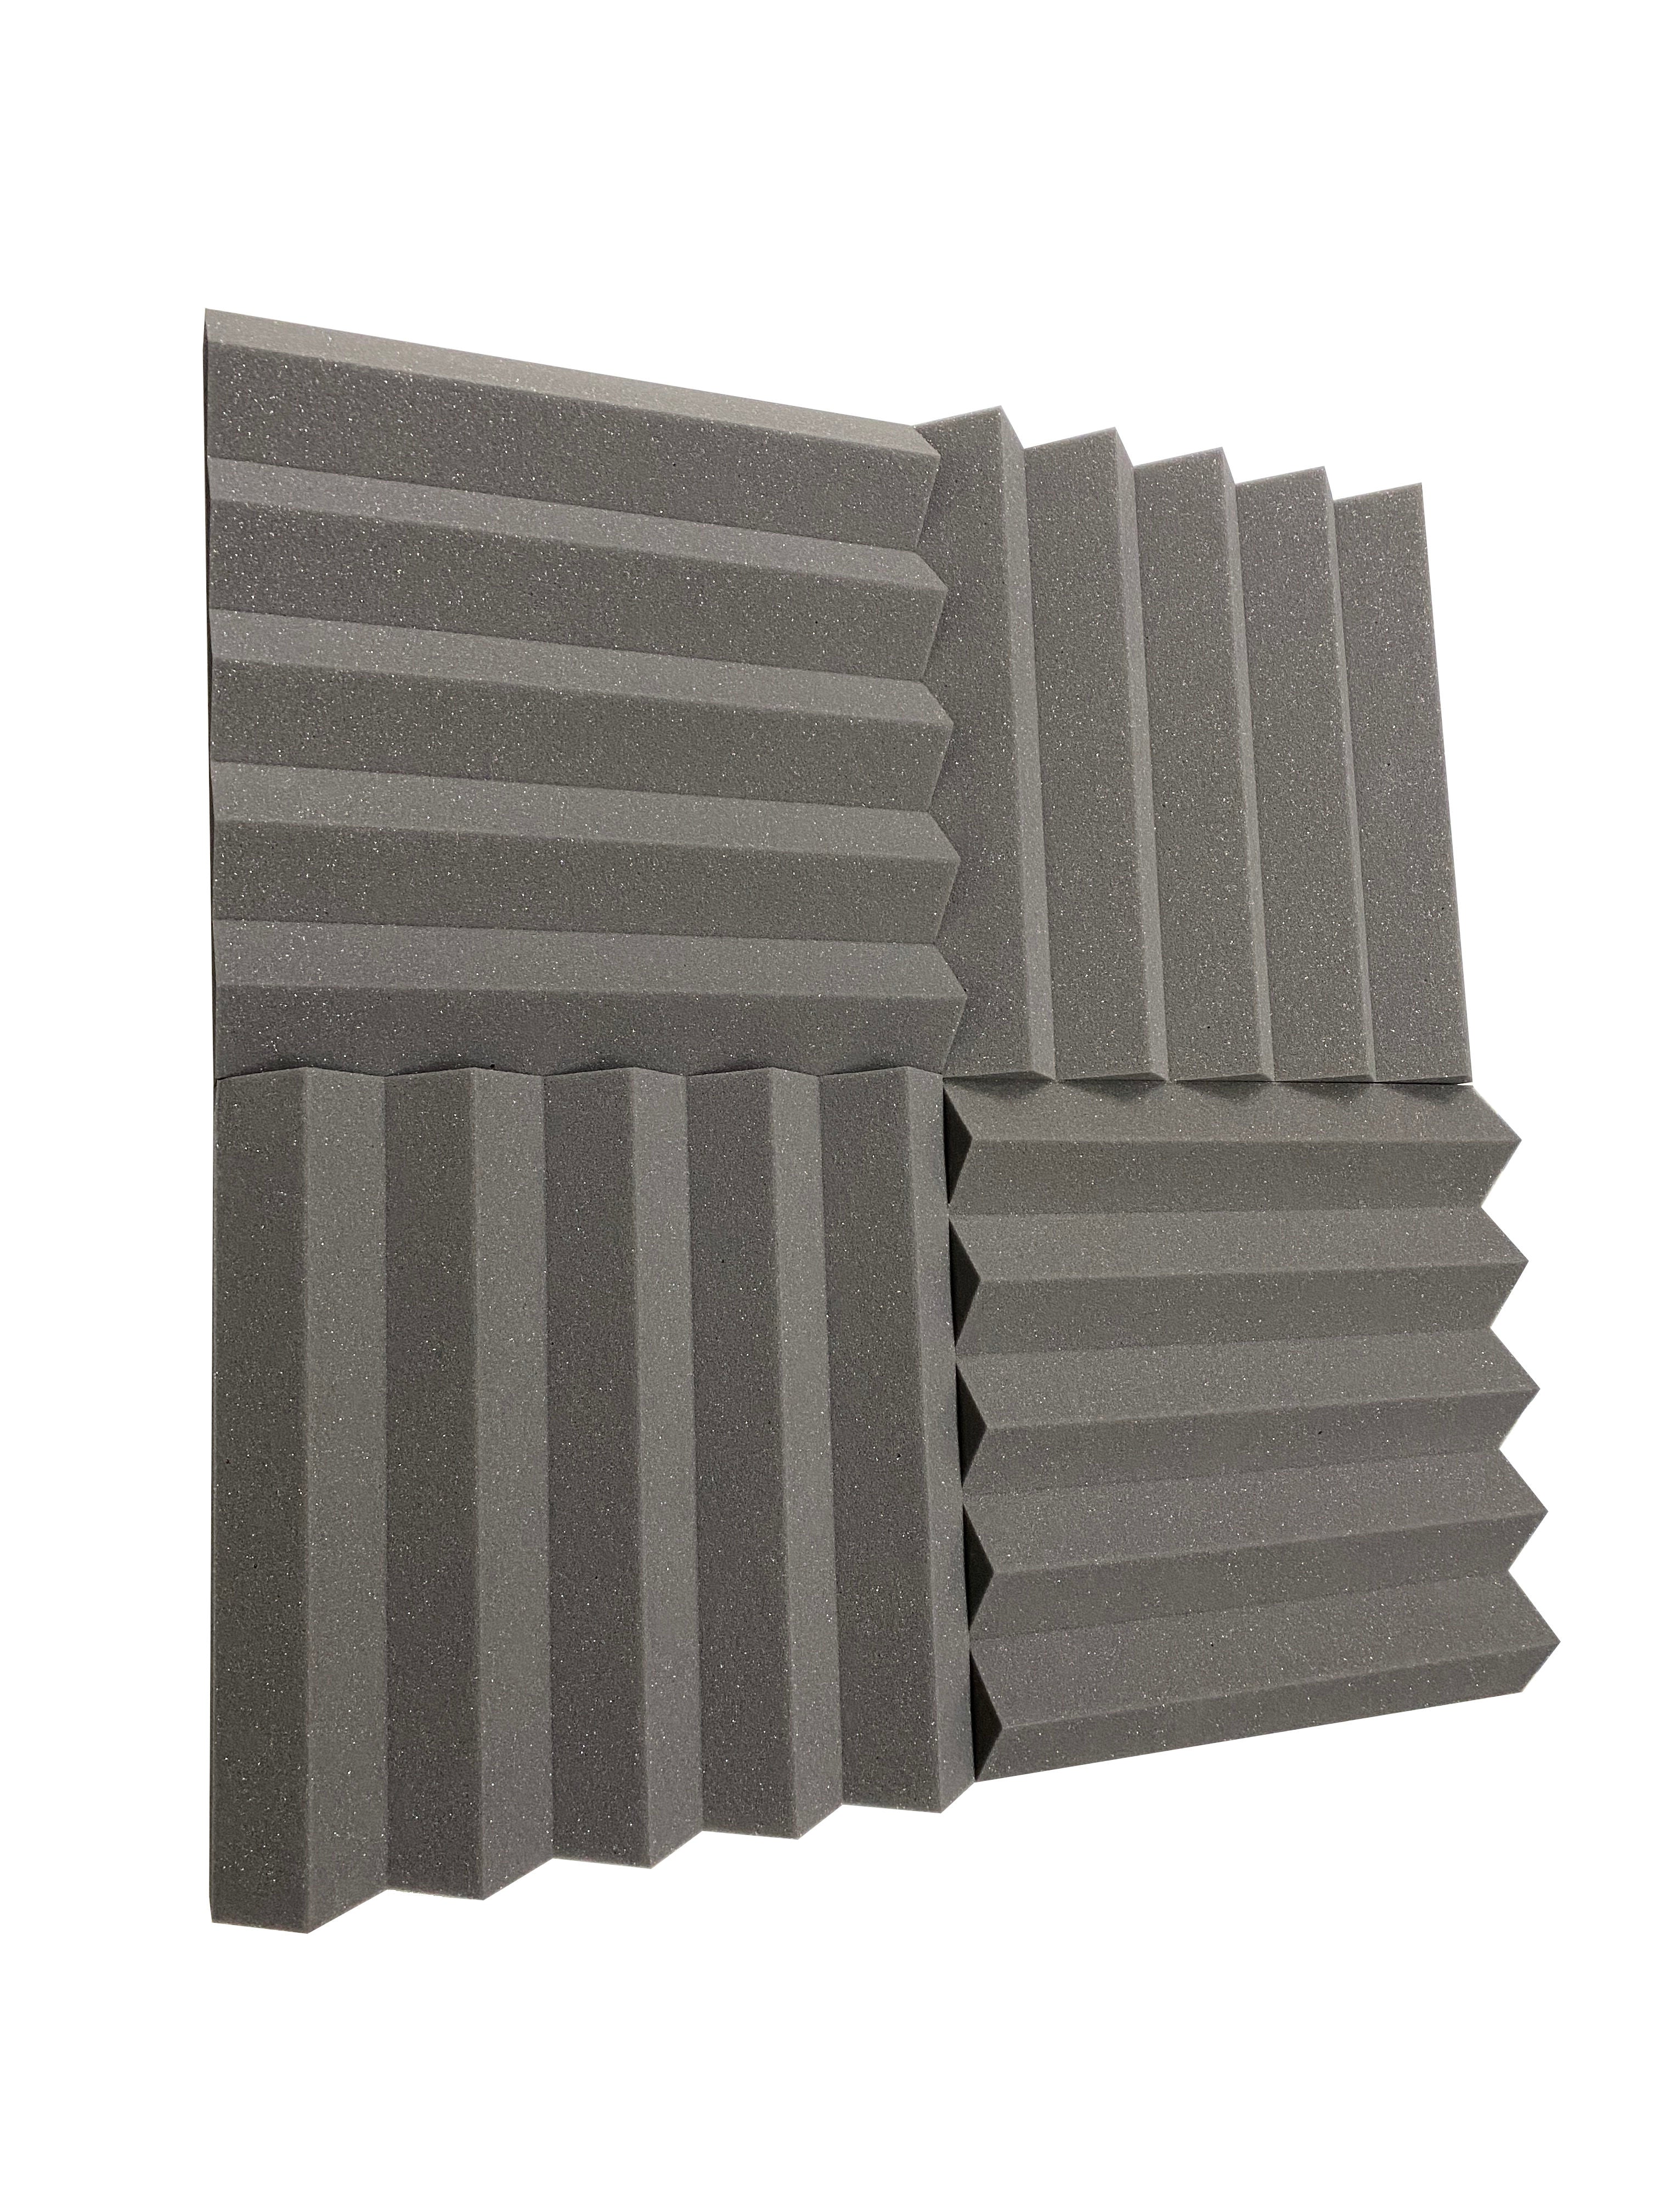 Kaufen mittelgrau Wedge PRO 15&quot; Acoustic Studio Foam Tile Kit – 72 Fliesen, 10,44 m² Abdeckung